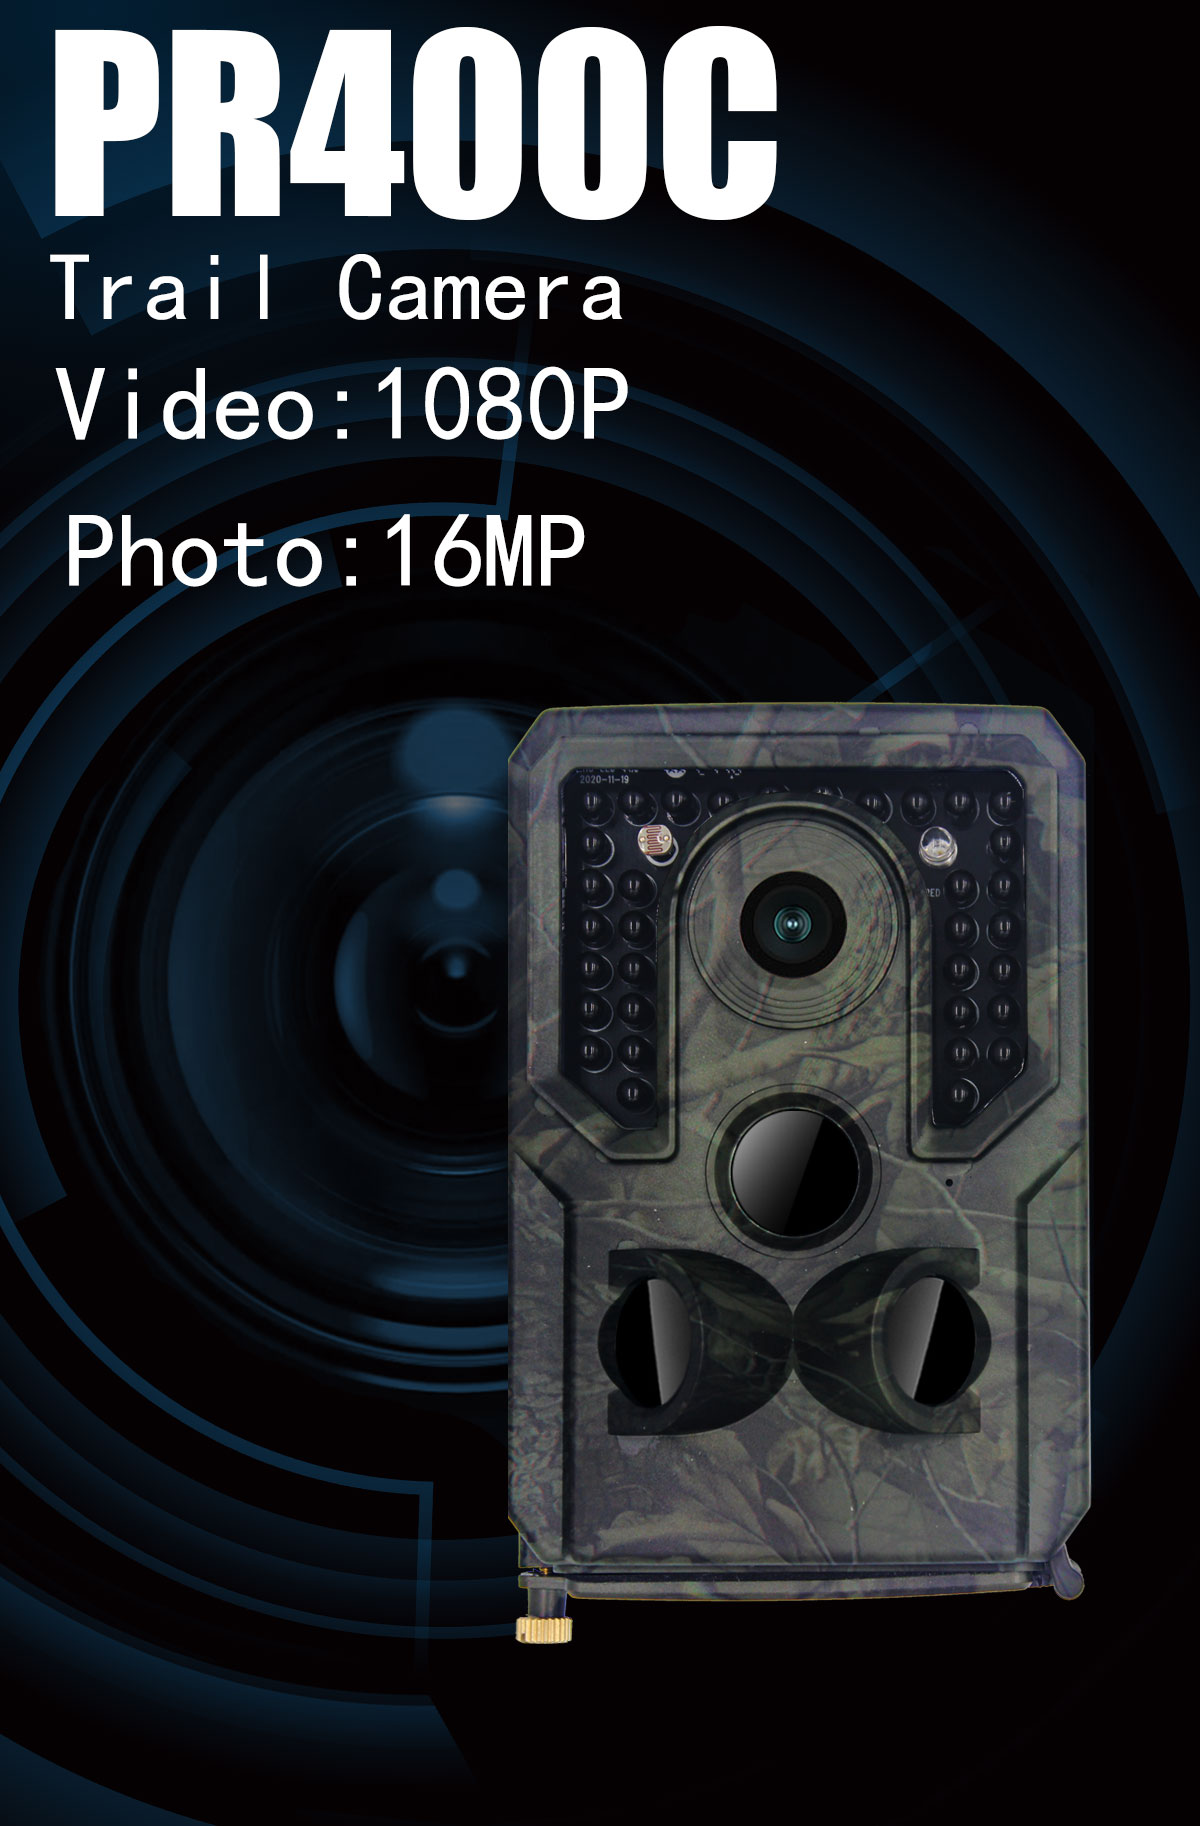 PR400C Hunting Camera